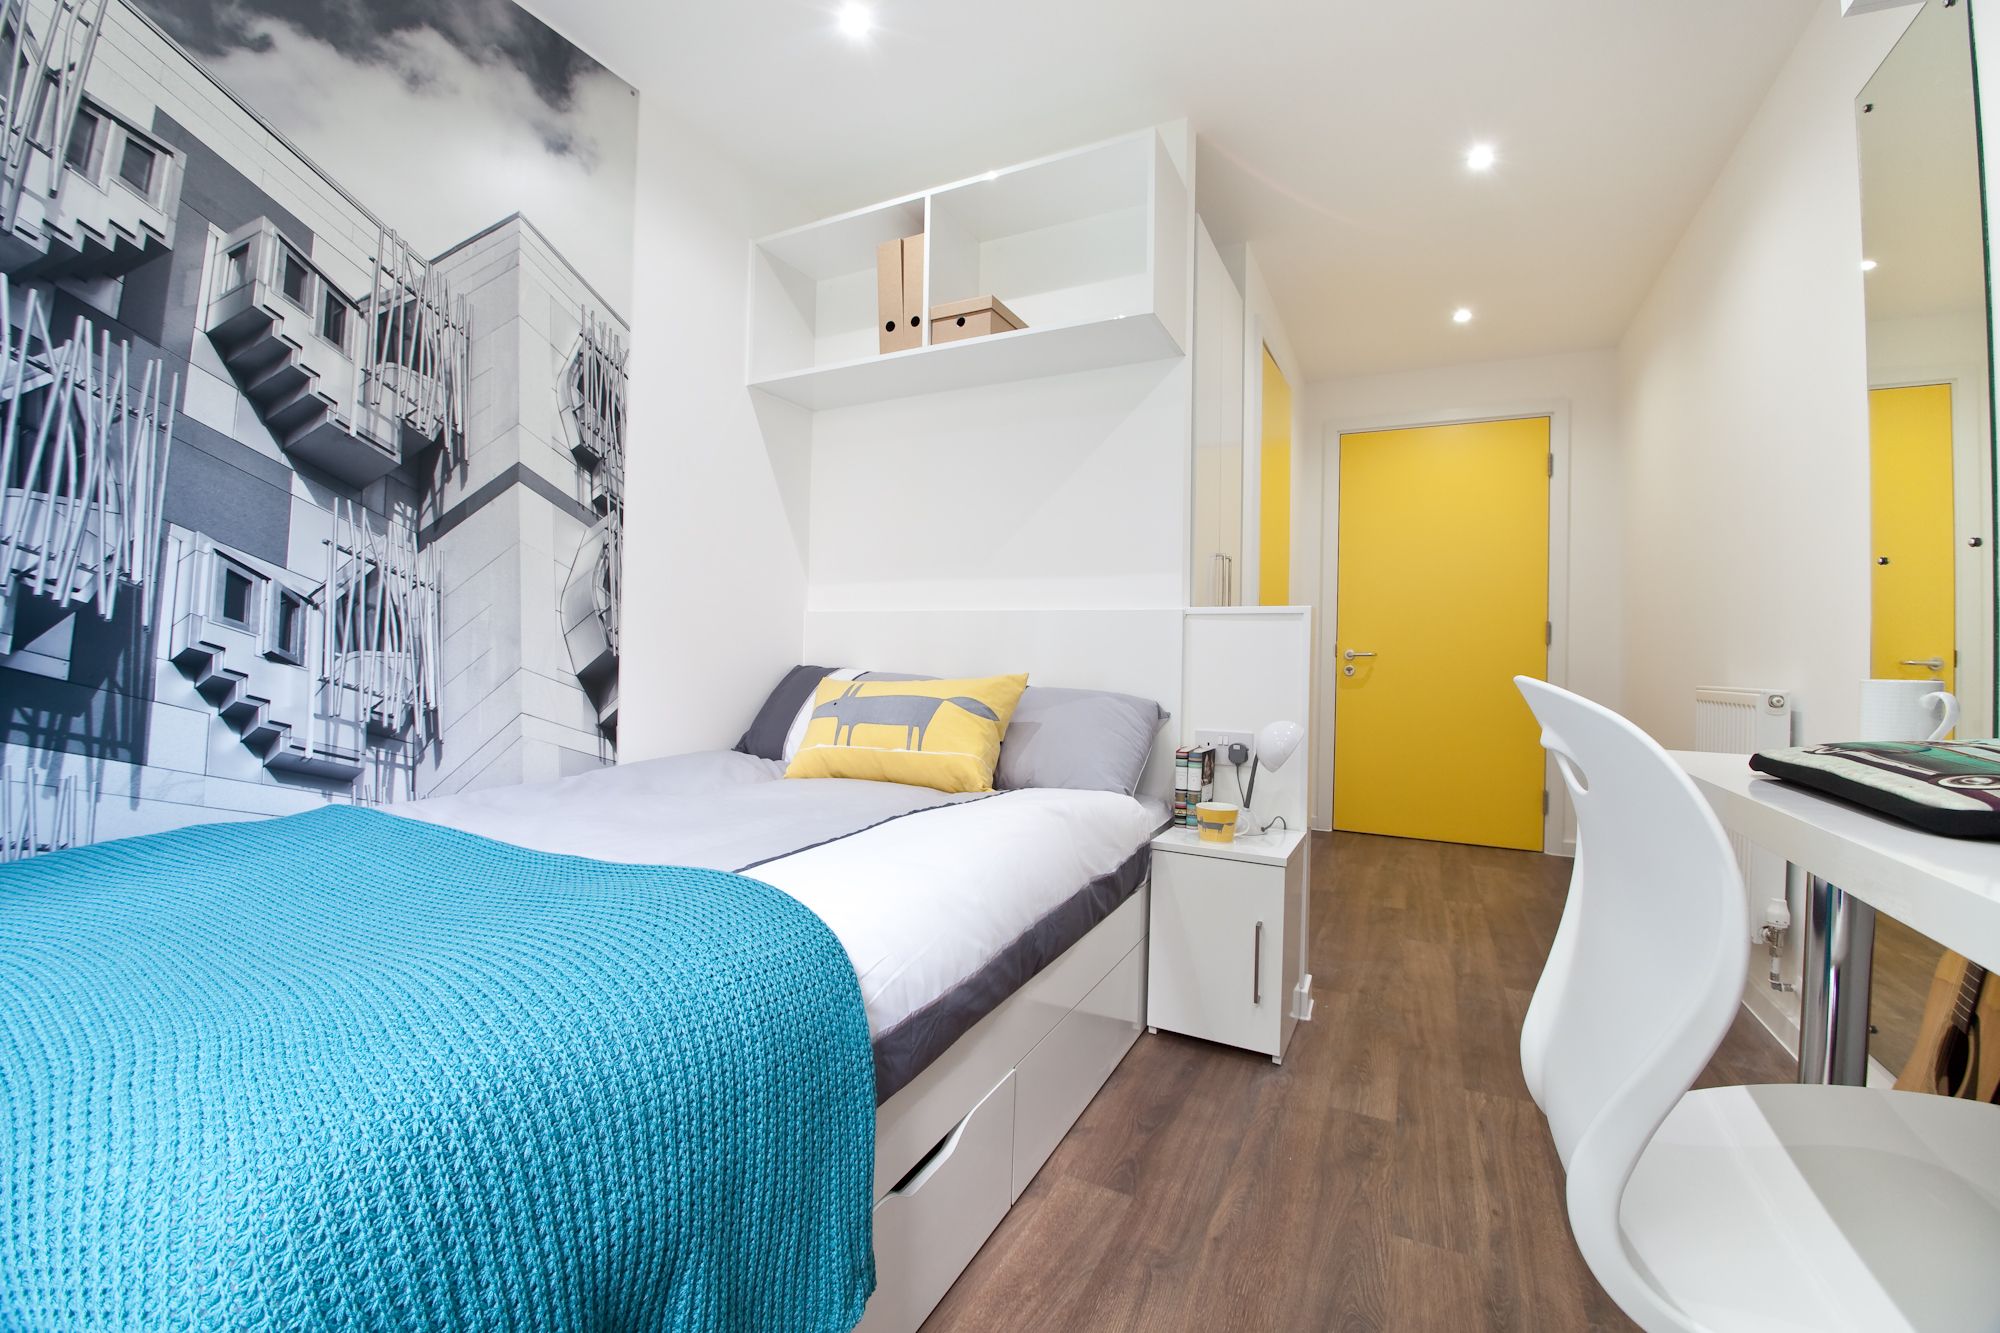 2 bedroom student accommodation liverpool